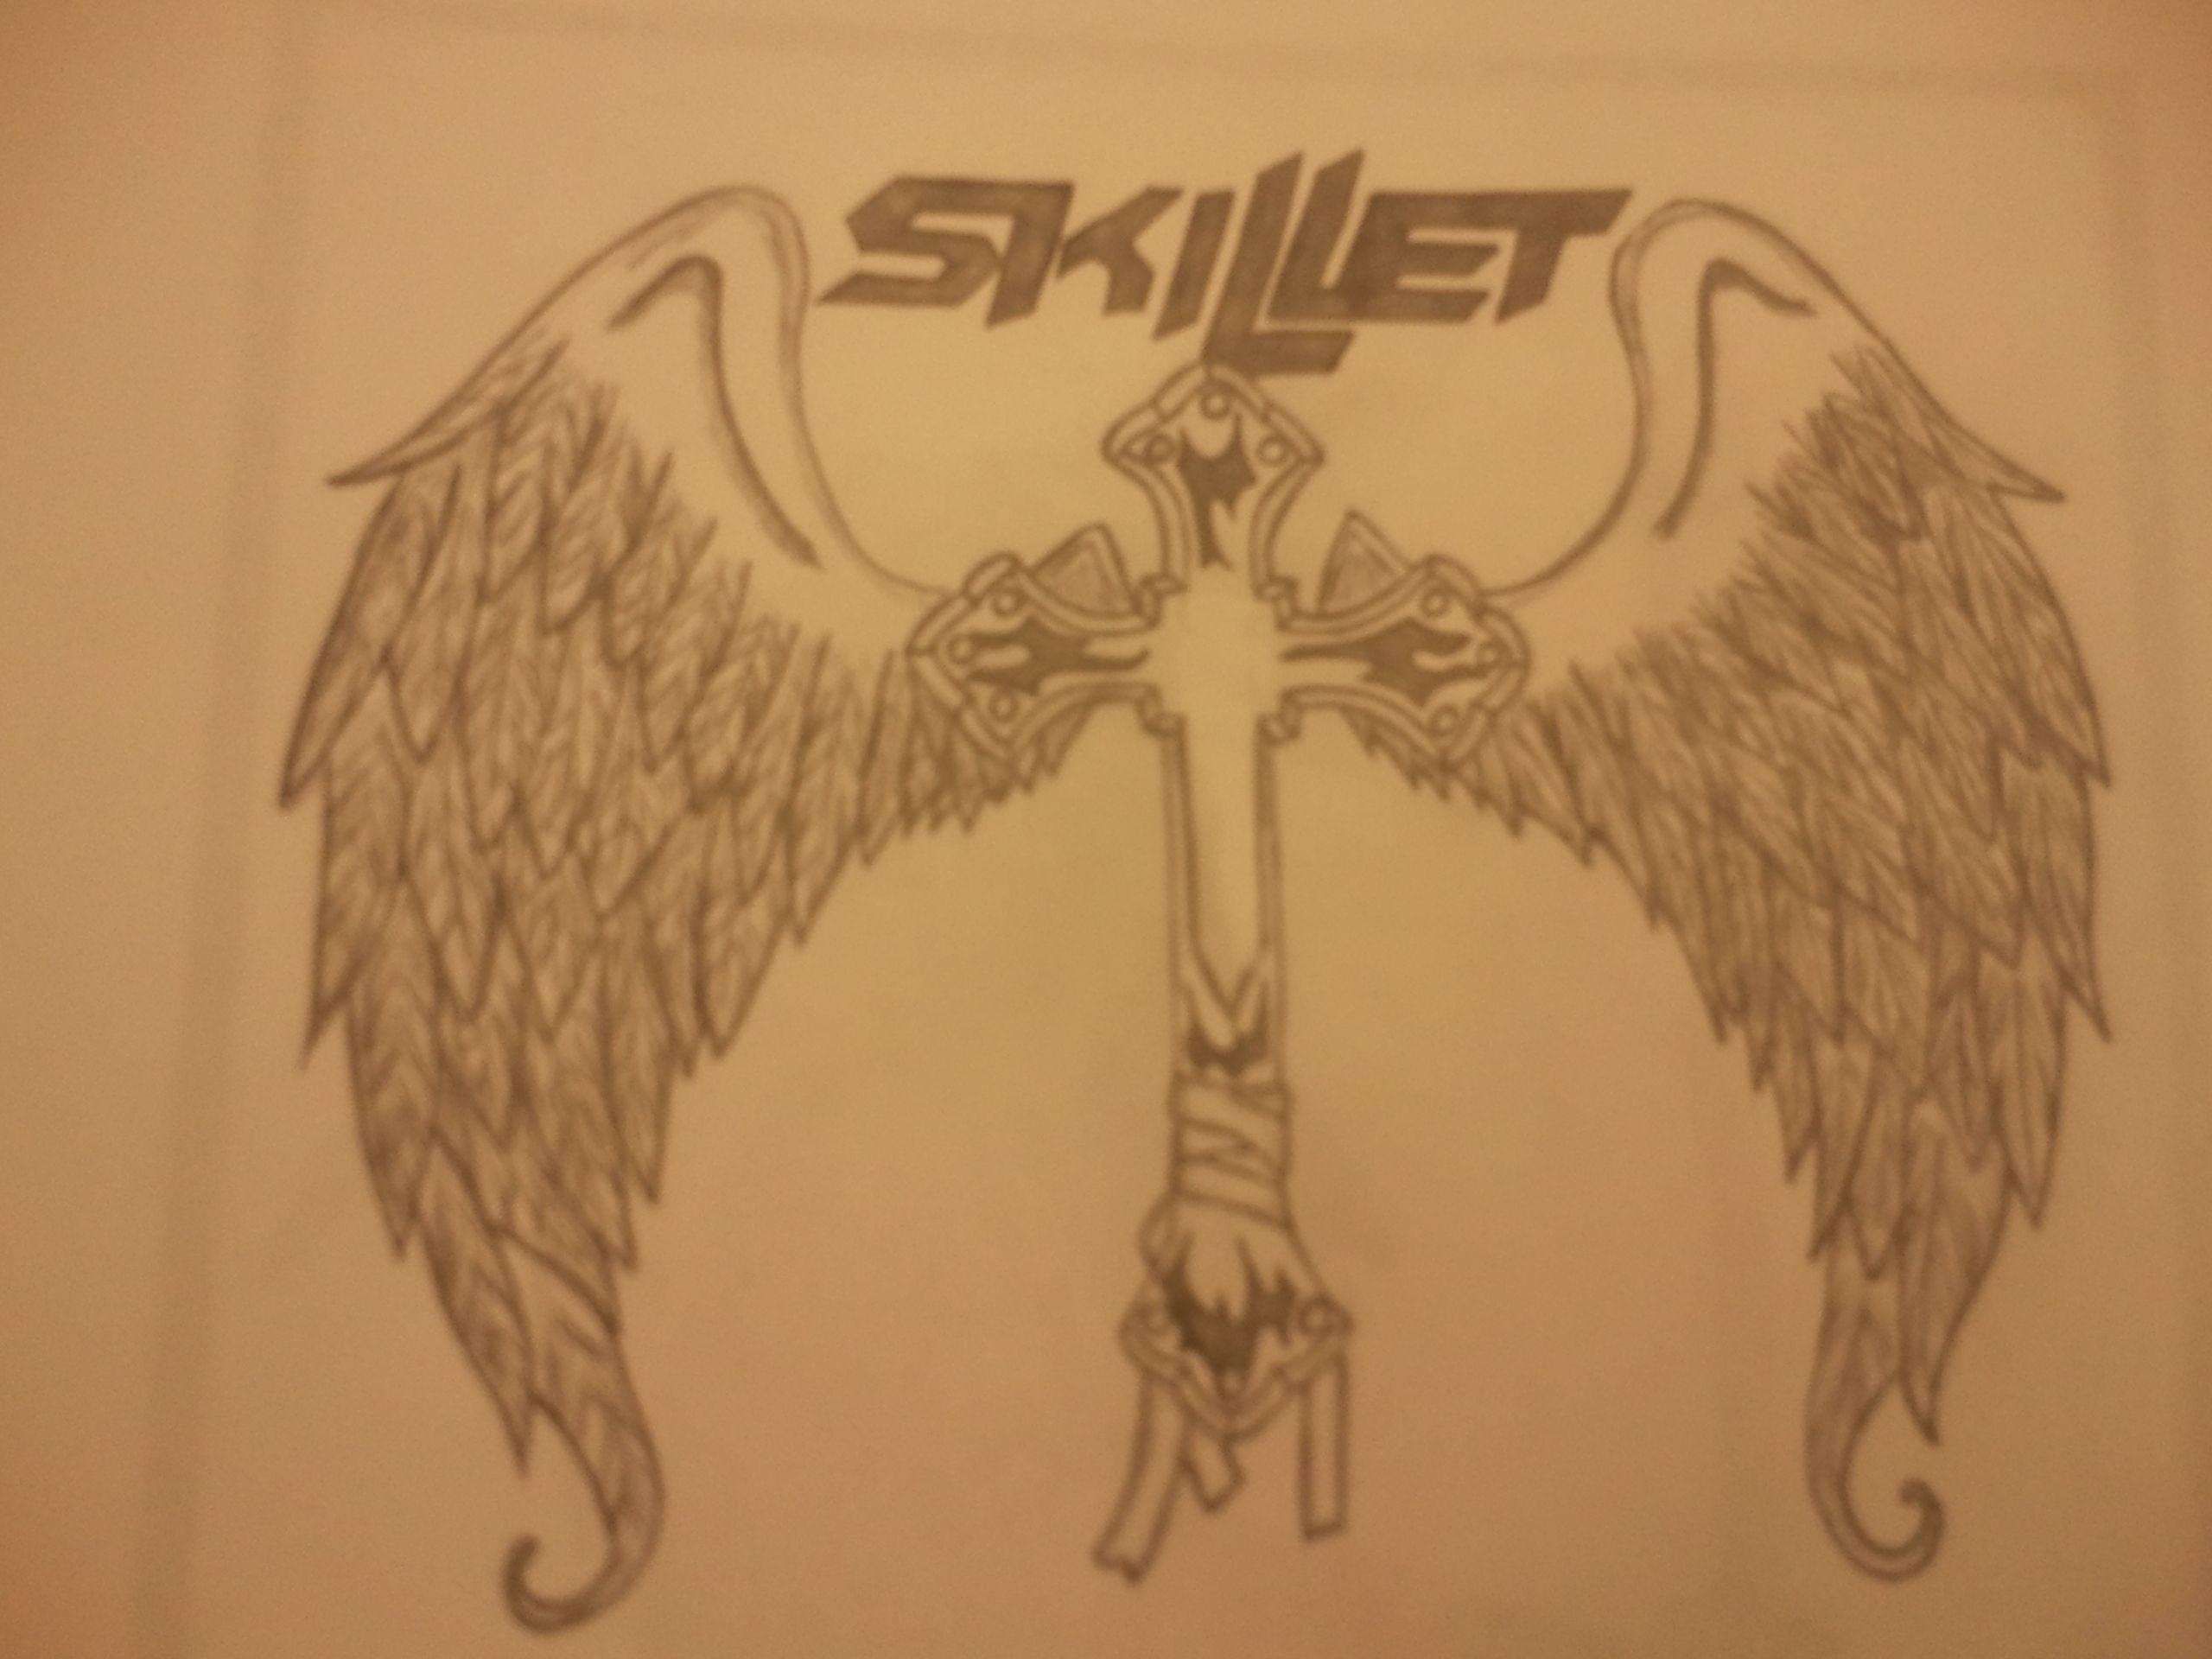 Skillet Logo - My Version of a New Skillet logo - Skillet Photos